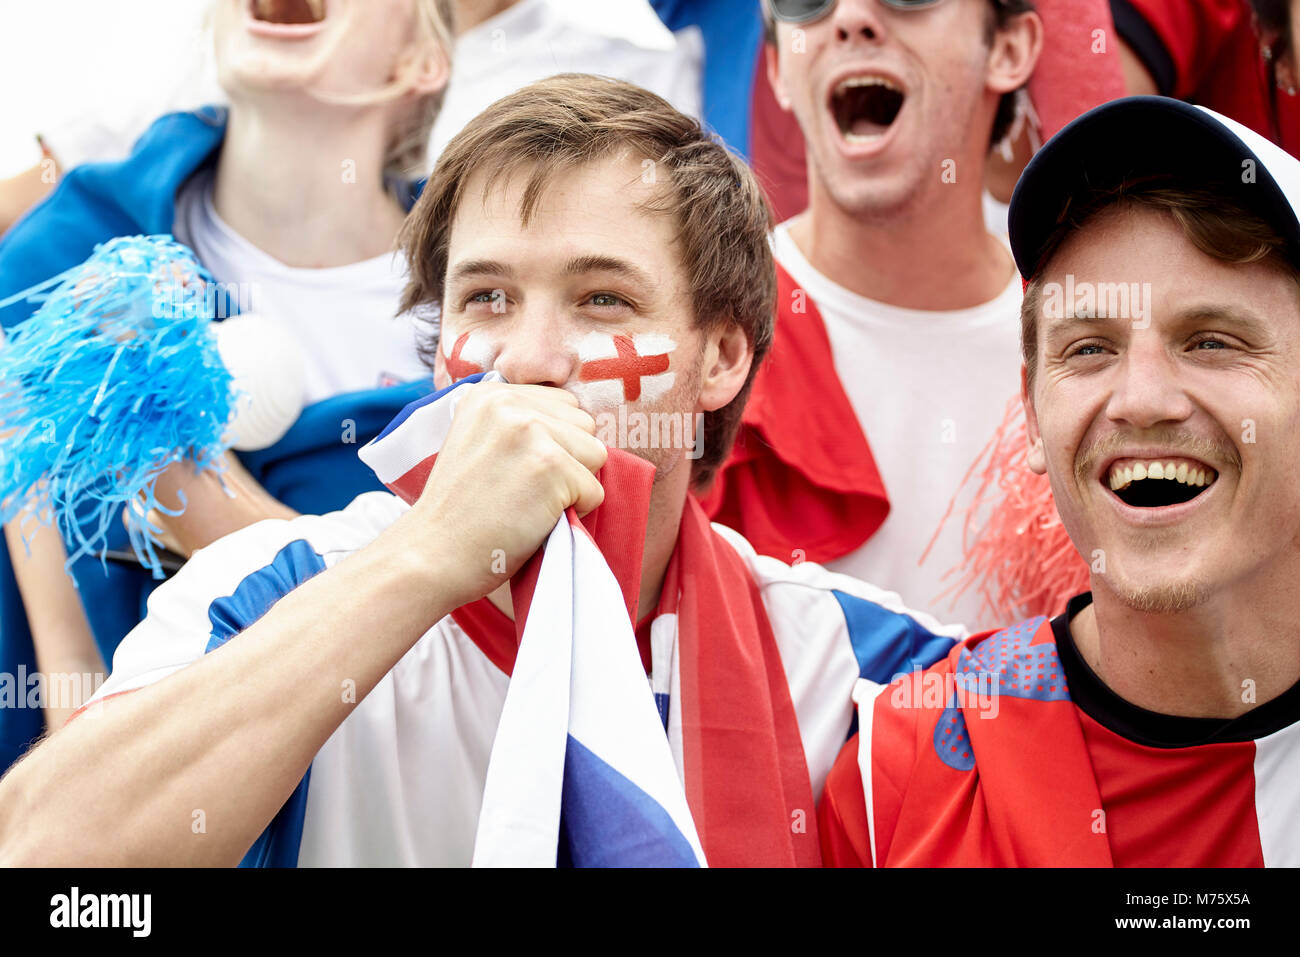 British football fans having fun at match Stock Photo